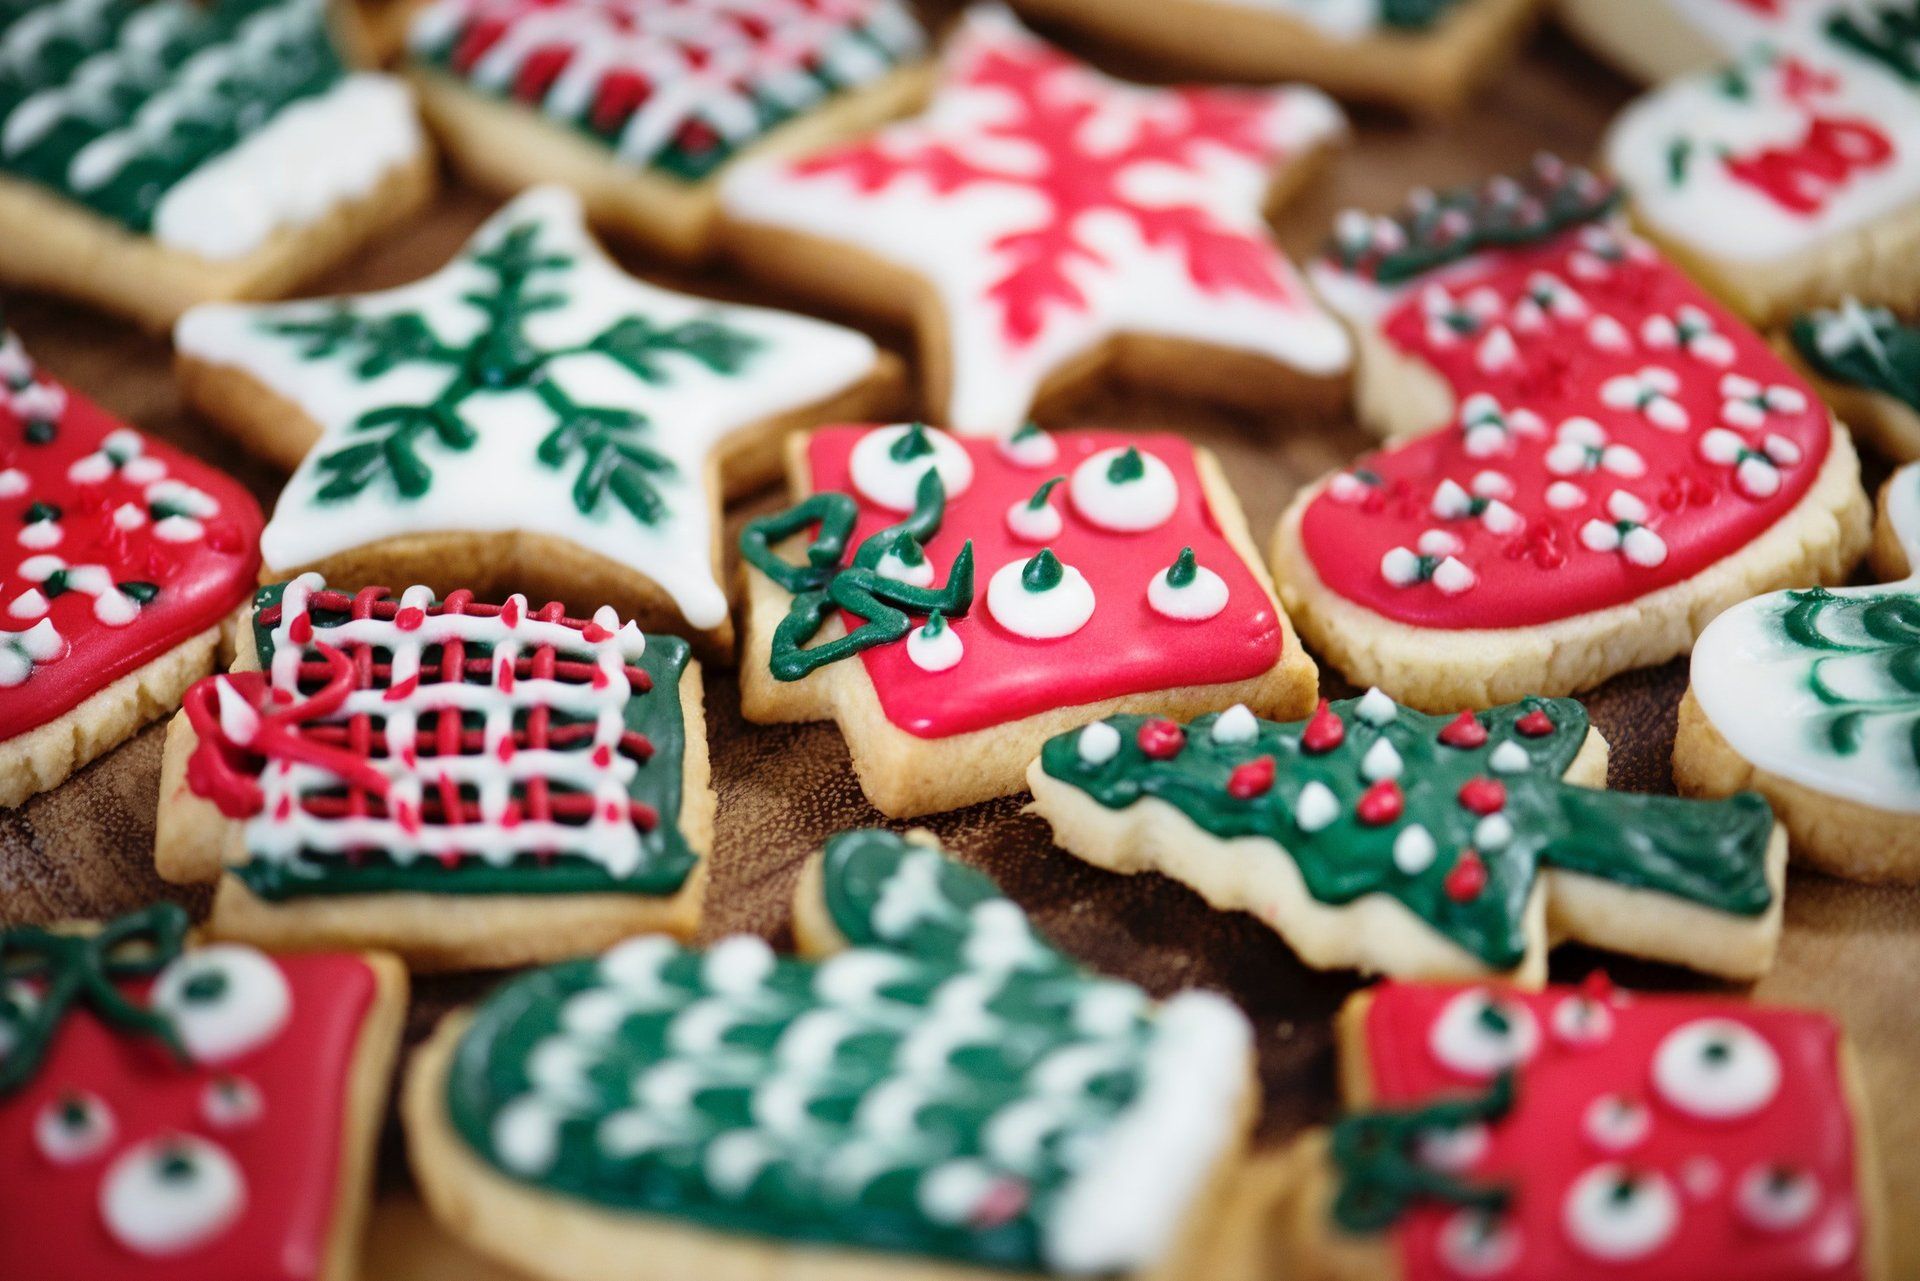 Residents at Heathwood enjoy decorating holiday cookies and celebrating the holidays in many ways.